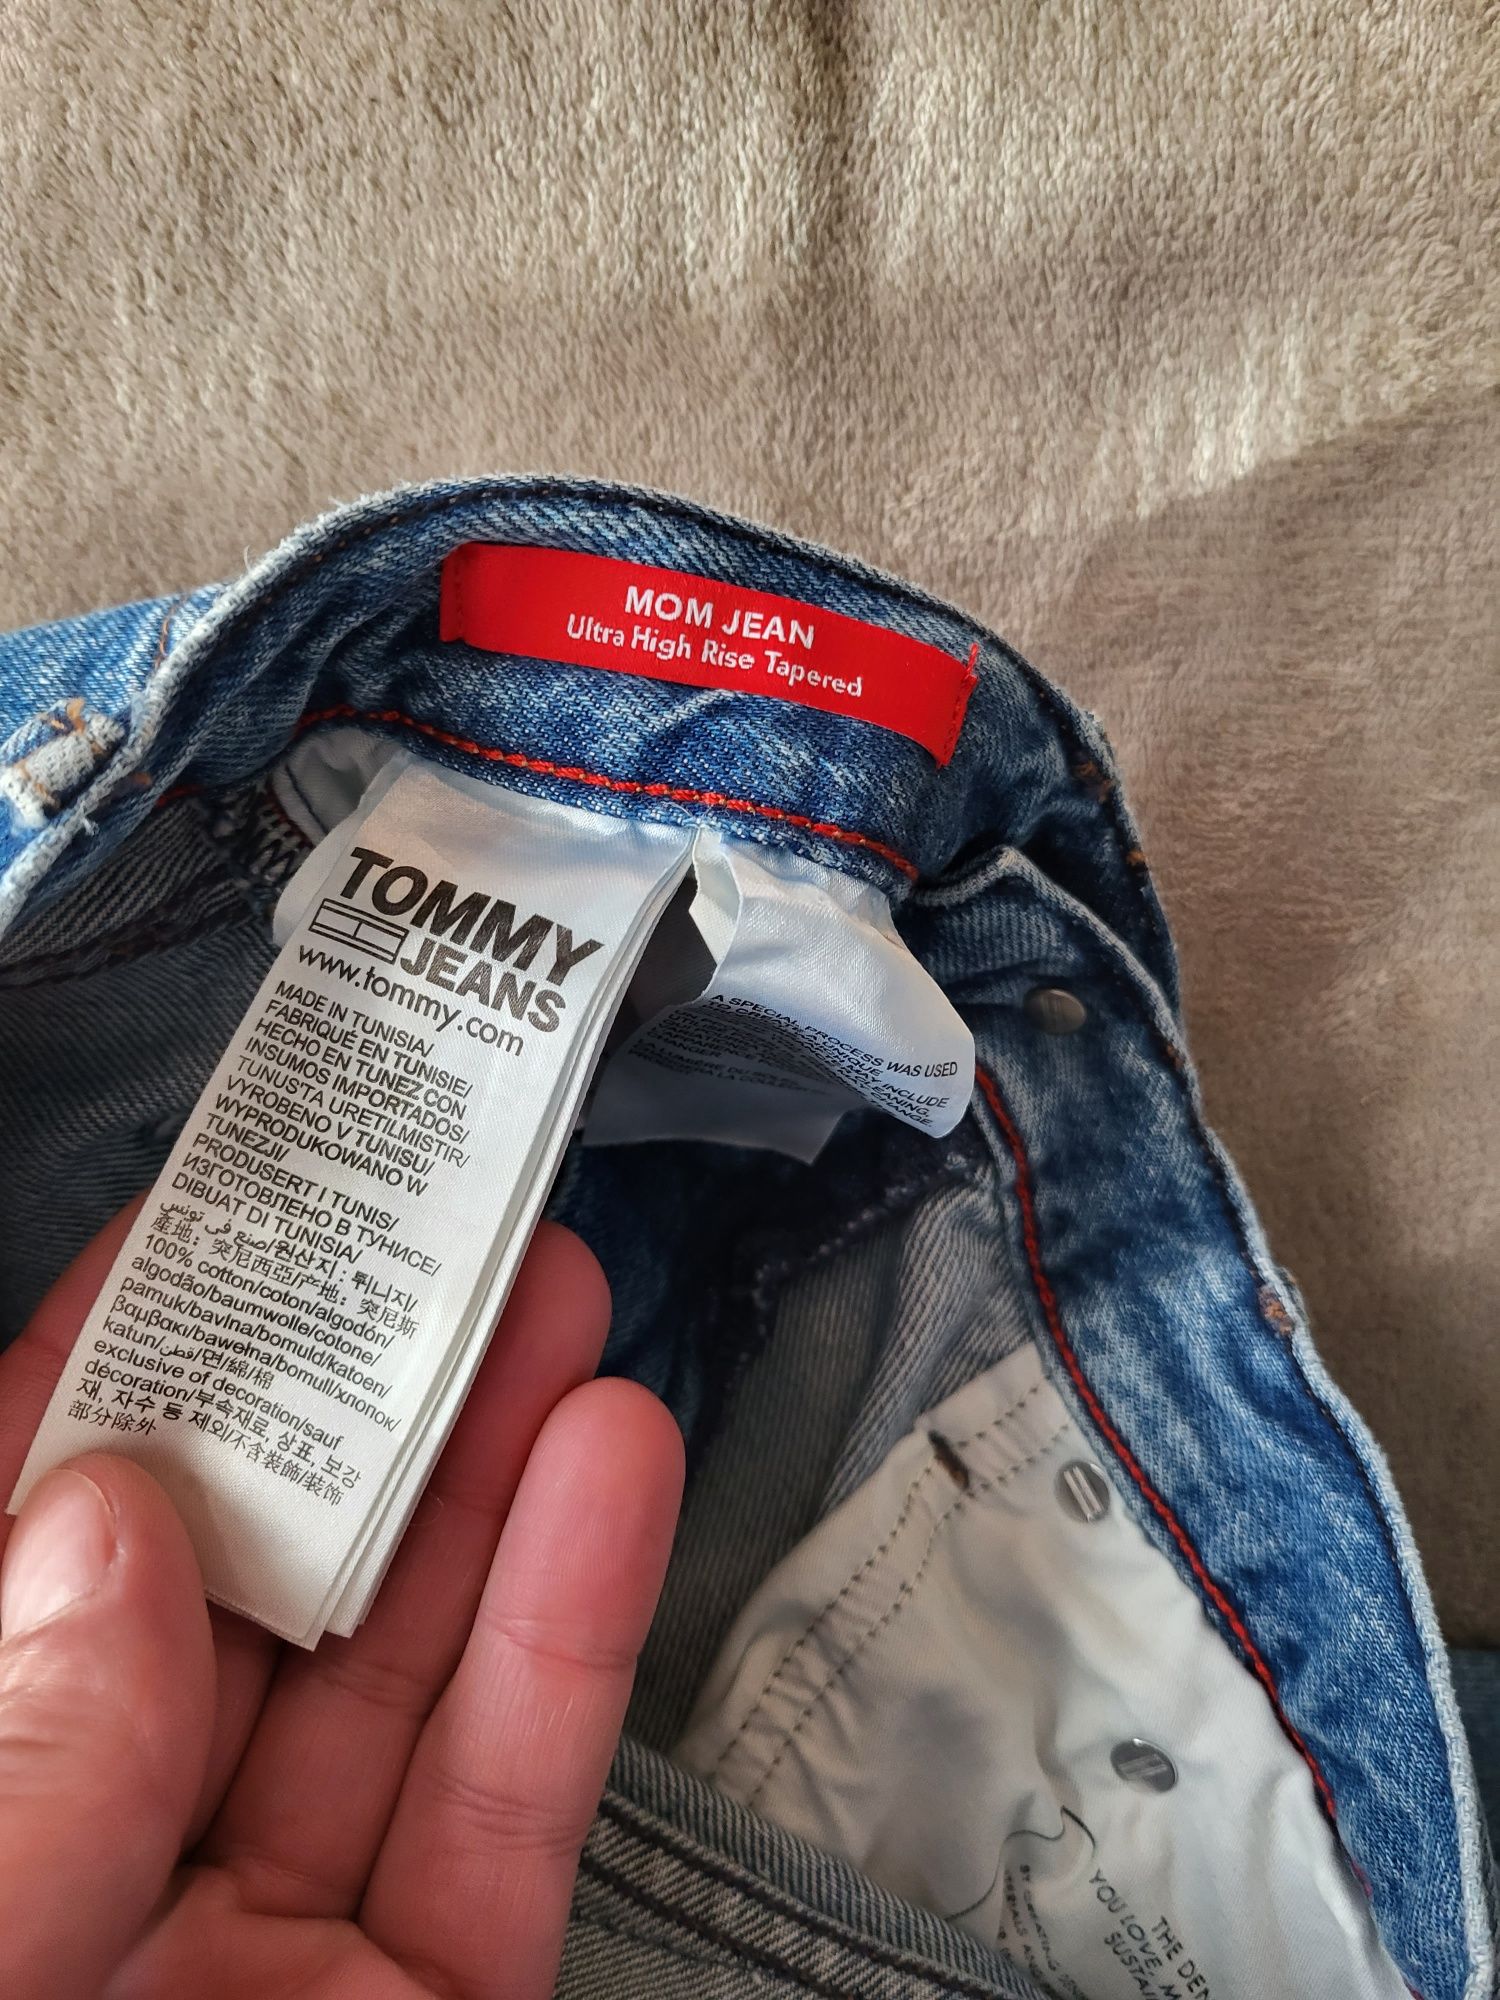 Damskie spodnie jeansy Tommy Hilfiger W 24 L 30 Nowe Orginalne